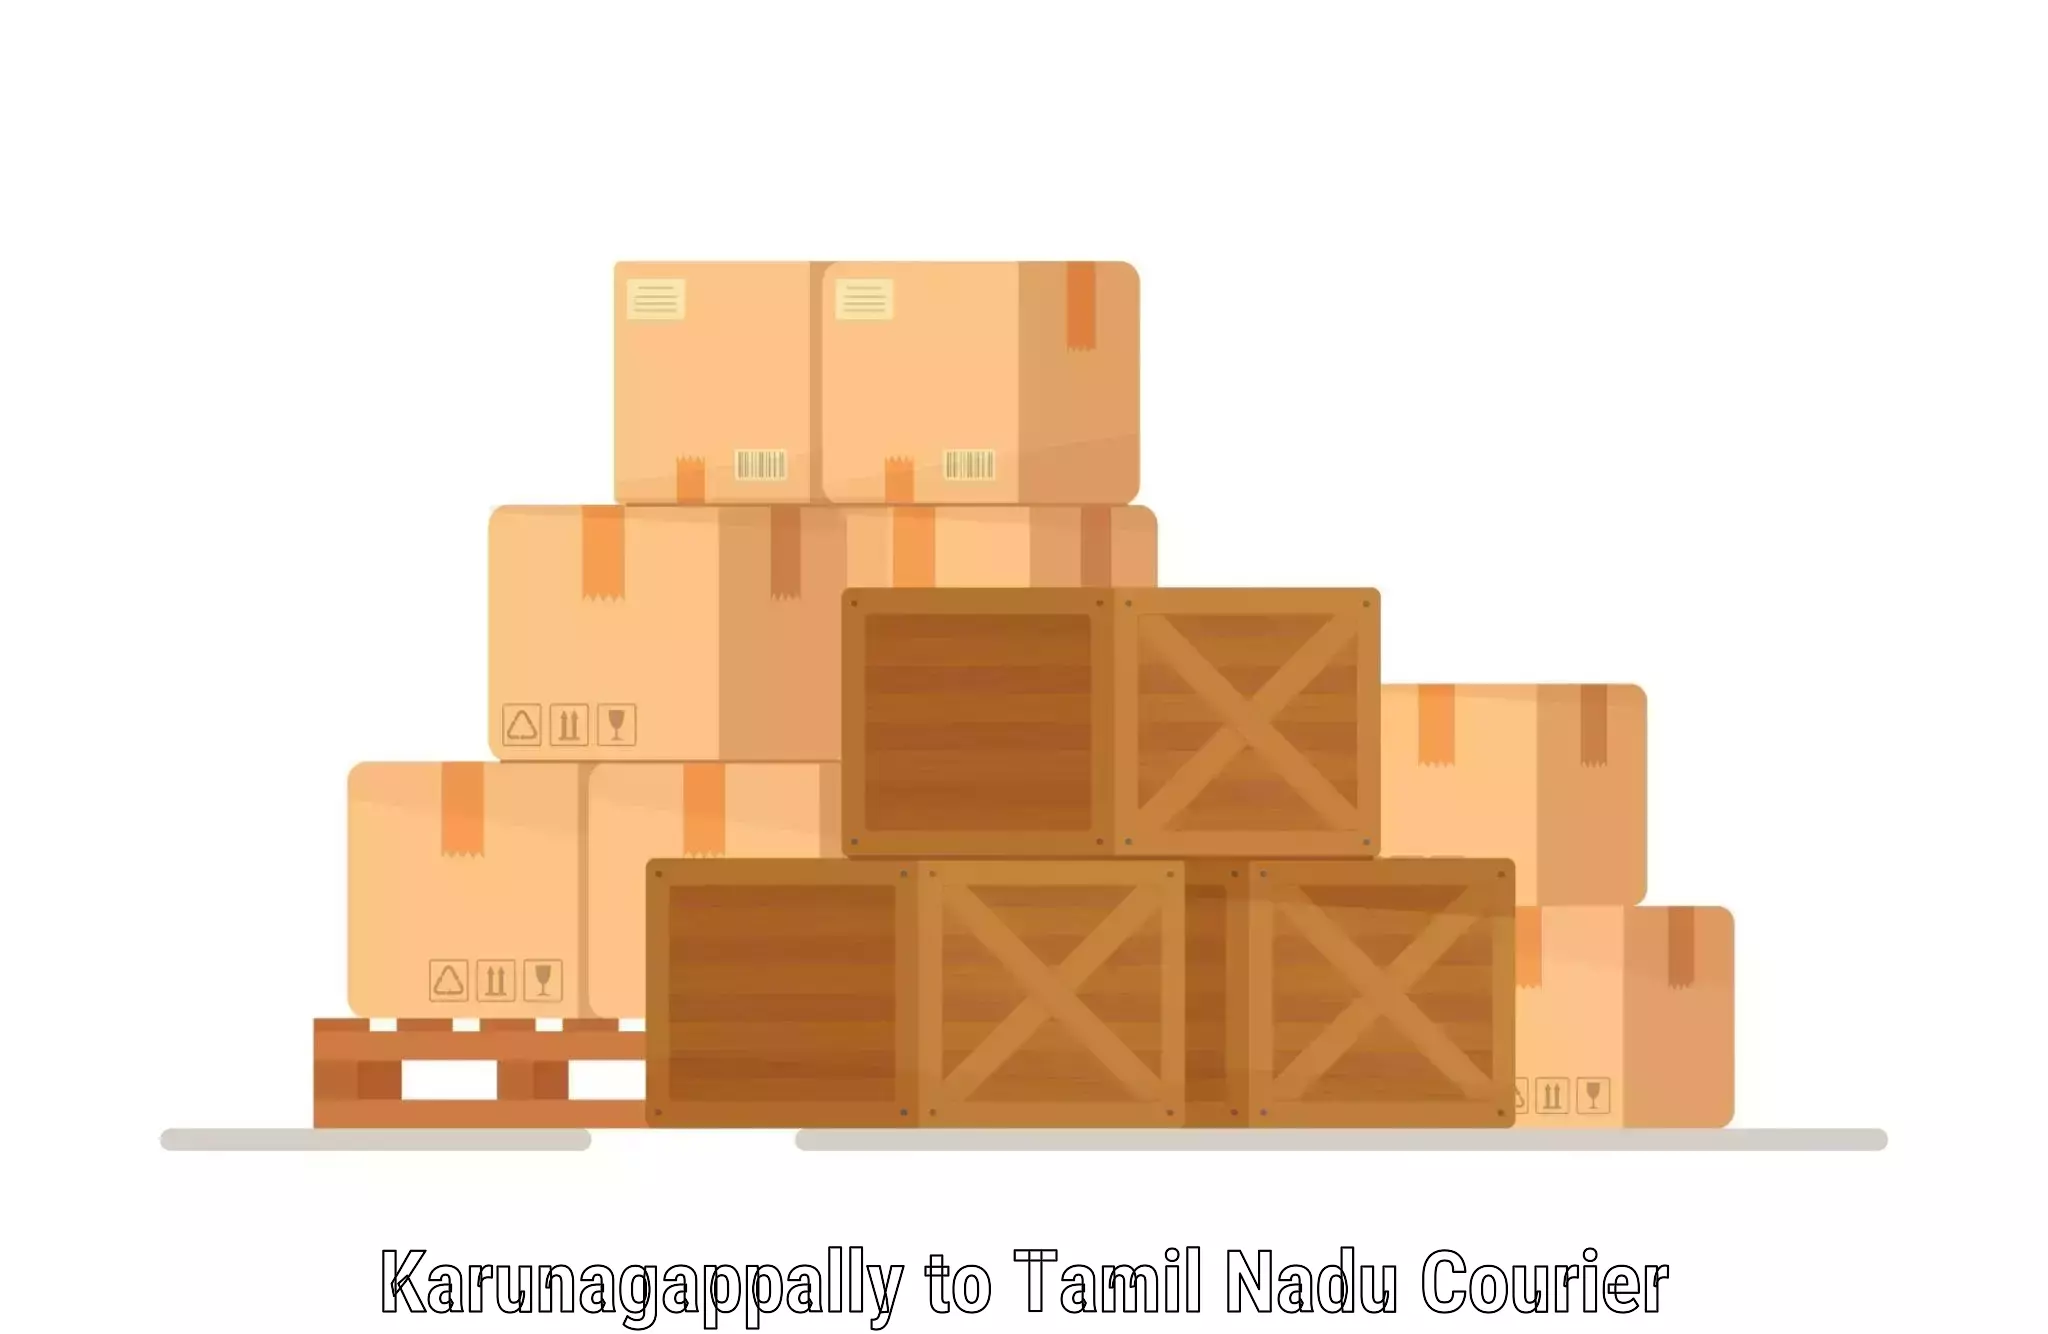 Express delivery capabilities Karunagappally to Kovilpatti